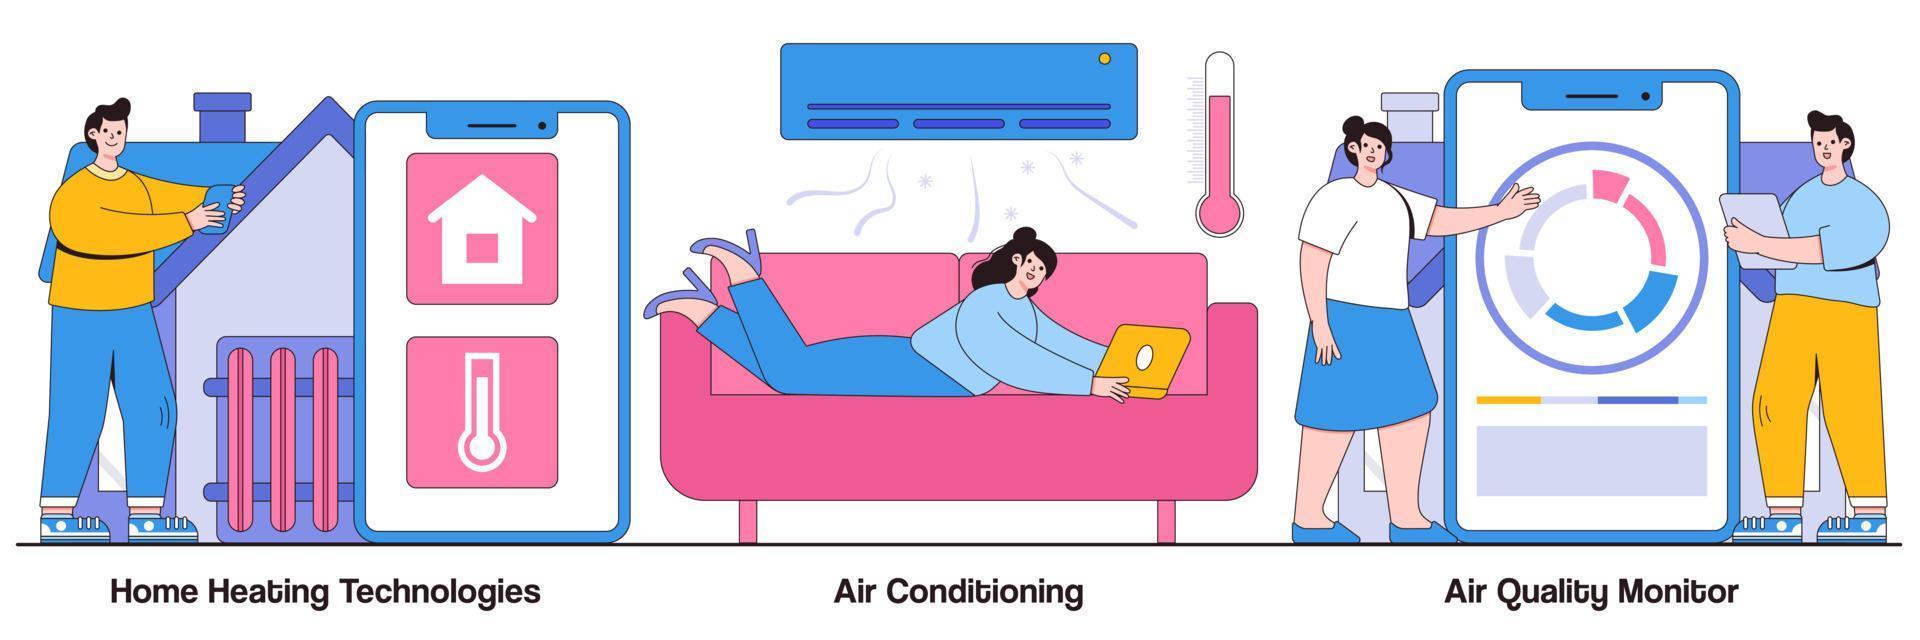 huisverwarmingstechnologieën, airconditioning en luchtkwaliteitsmonitor geïllustreerd pakket vector